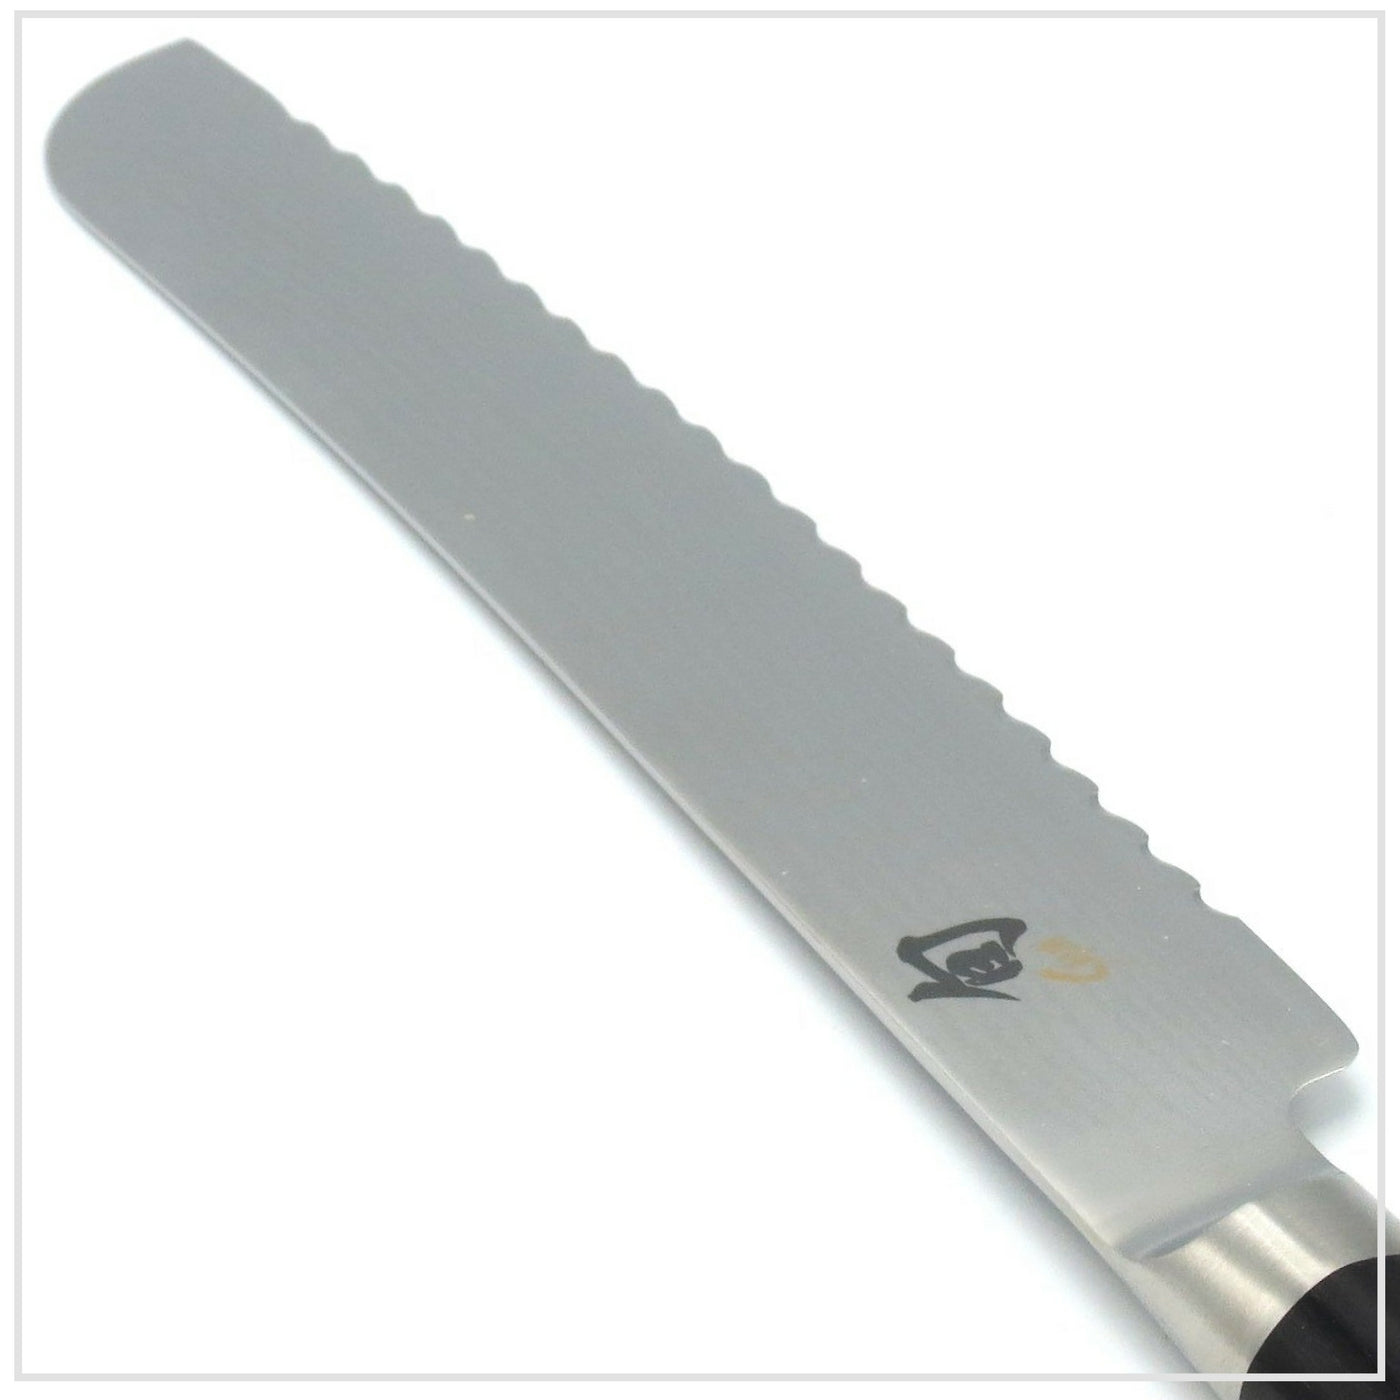 KAI SHUN Bread Knife 23 cm